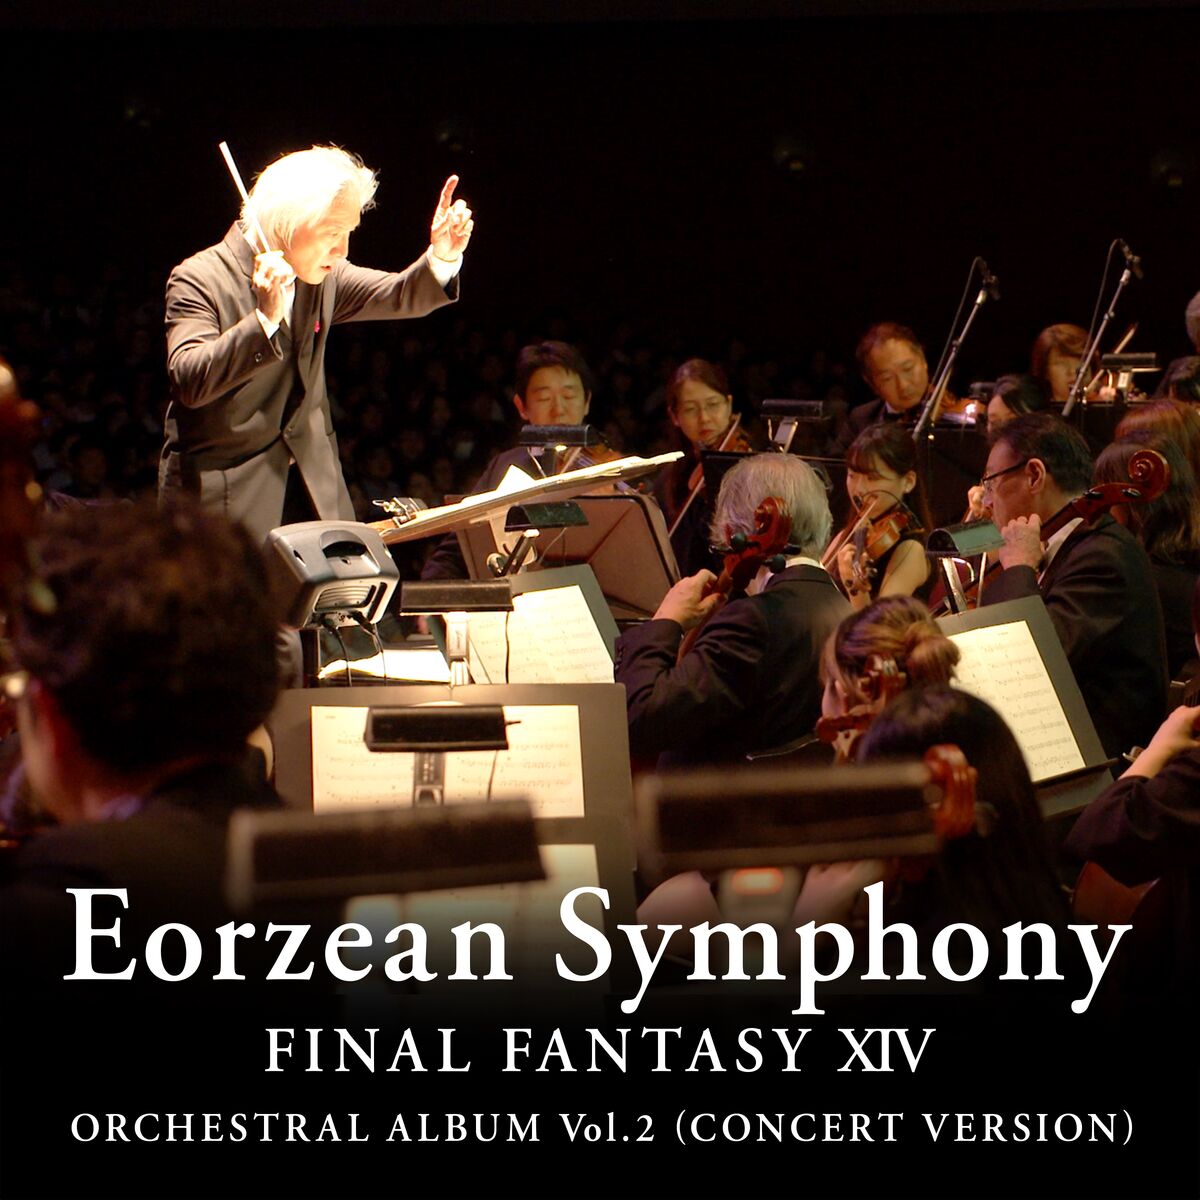 Eorzean Symphony: Final Fantasy XIV Orchestral Album Vol.2 